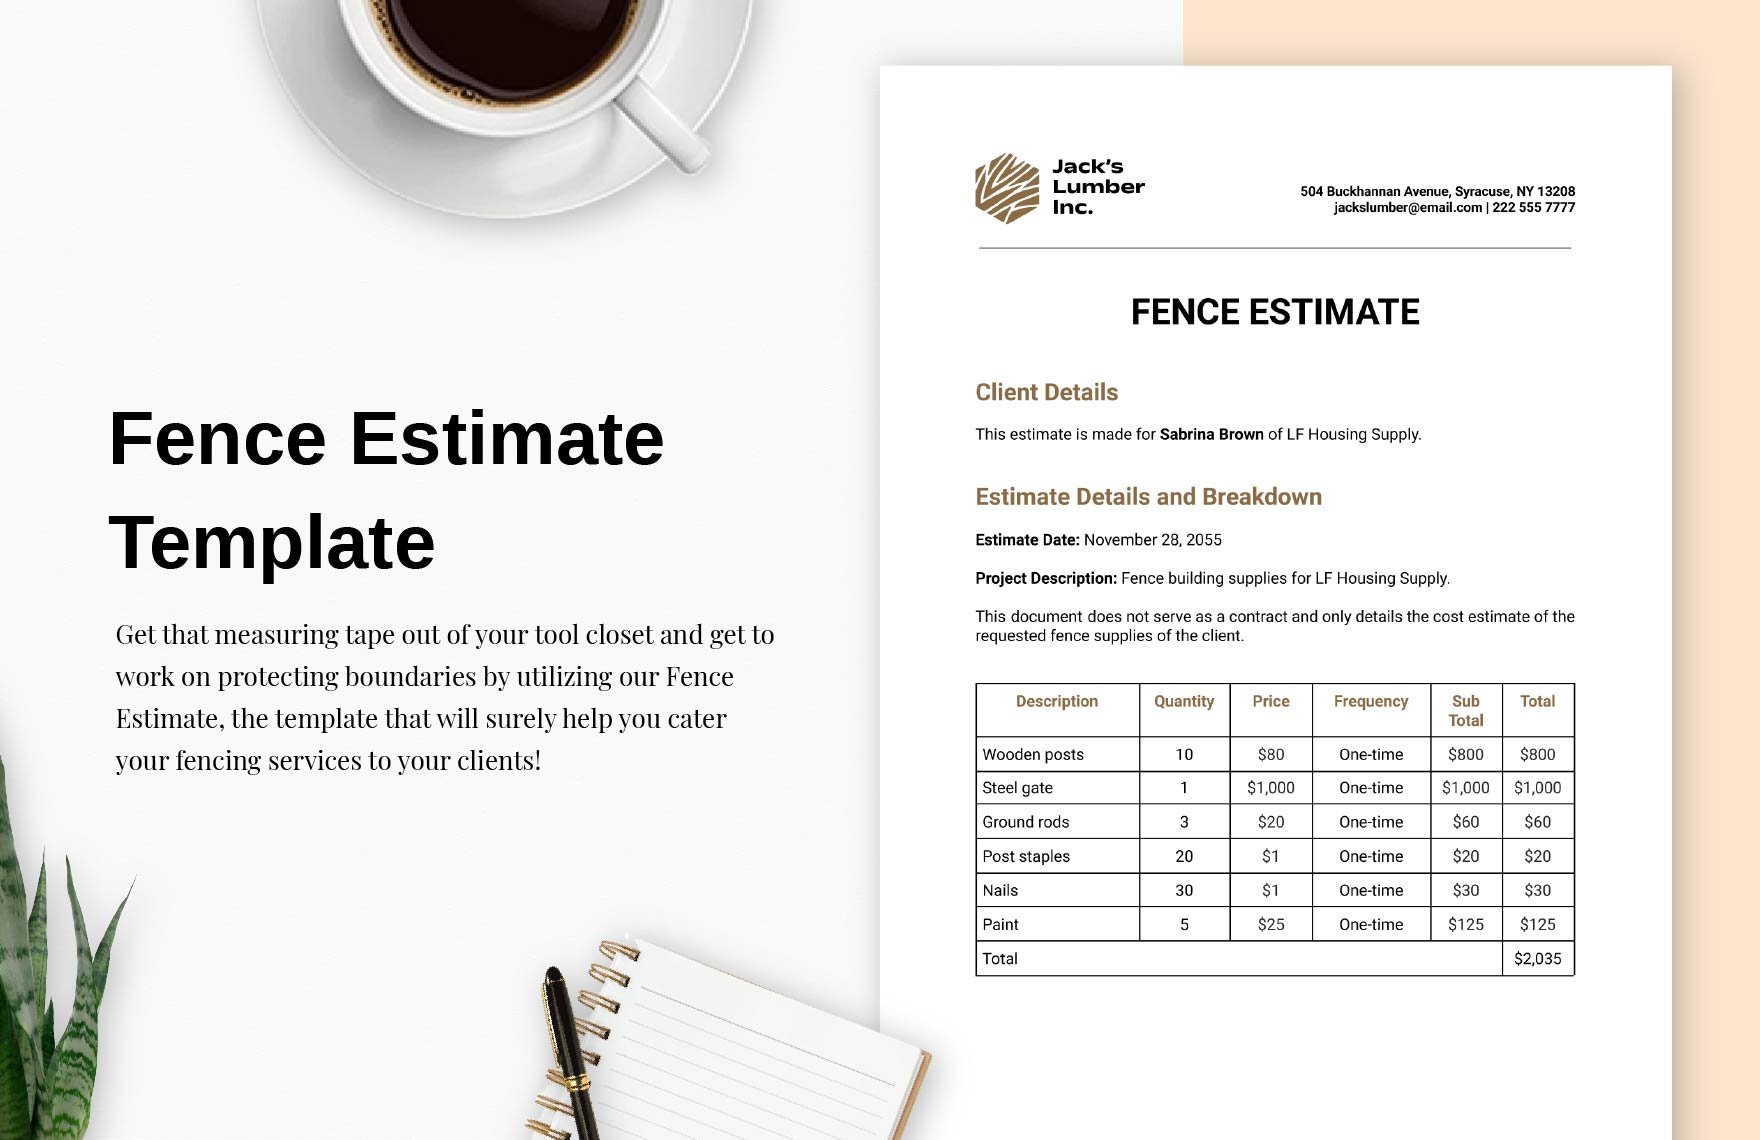 Fence Estimate Template in Word, Google Docs, PDF